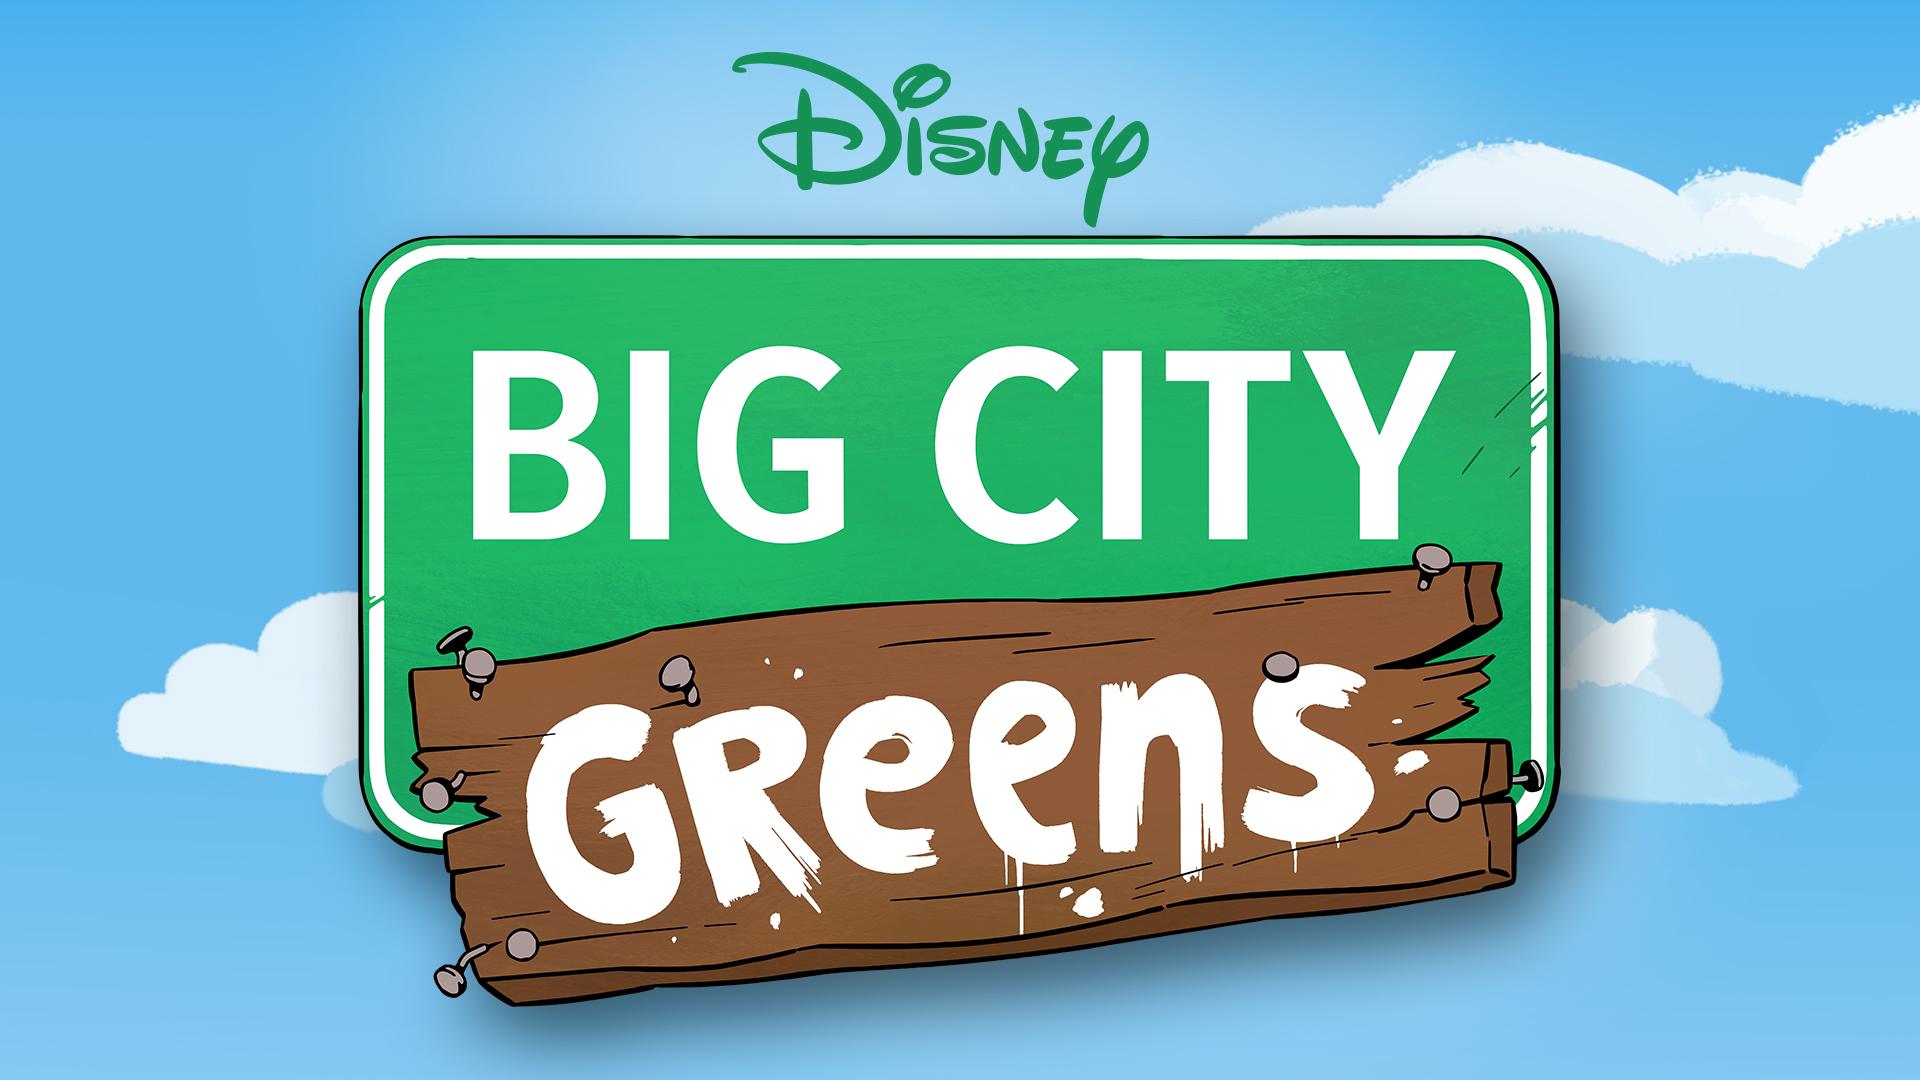 Big city greens - long goodbye